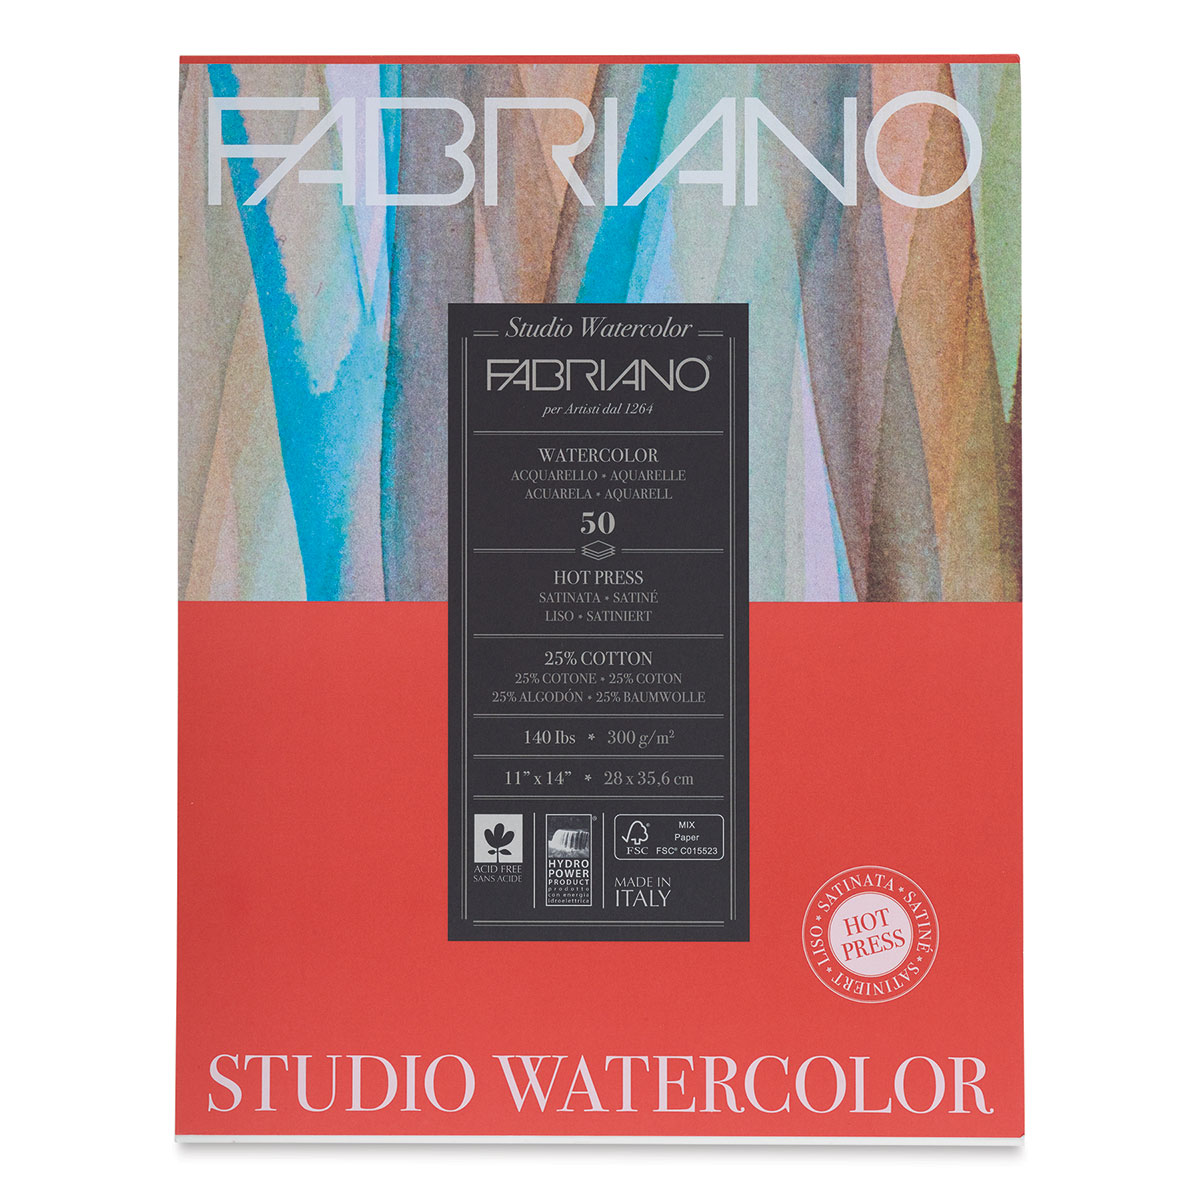 Fabriano Studio Watercolor Pad - 11' x 14', 300 gsm, Hot Press, 50 Sheets